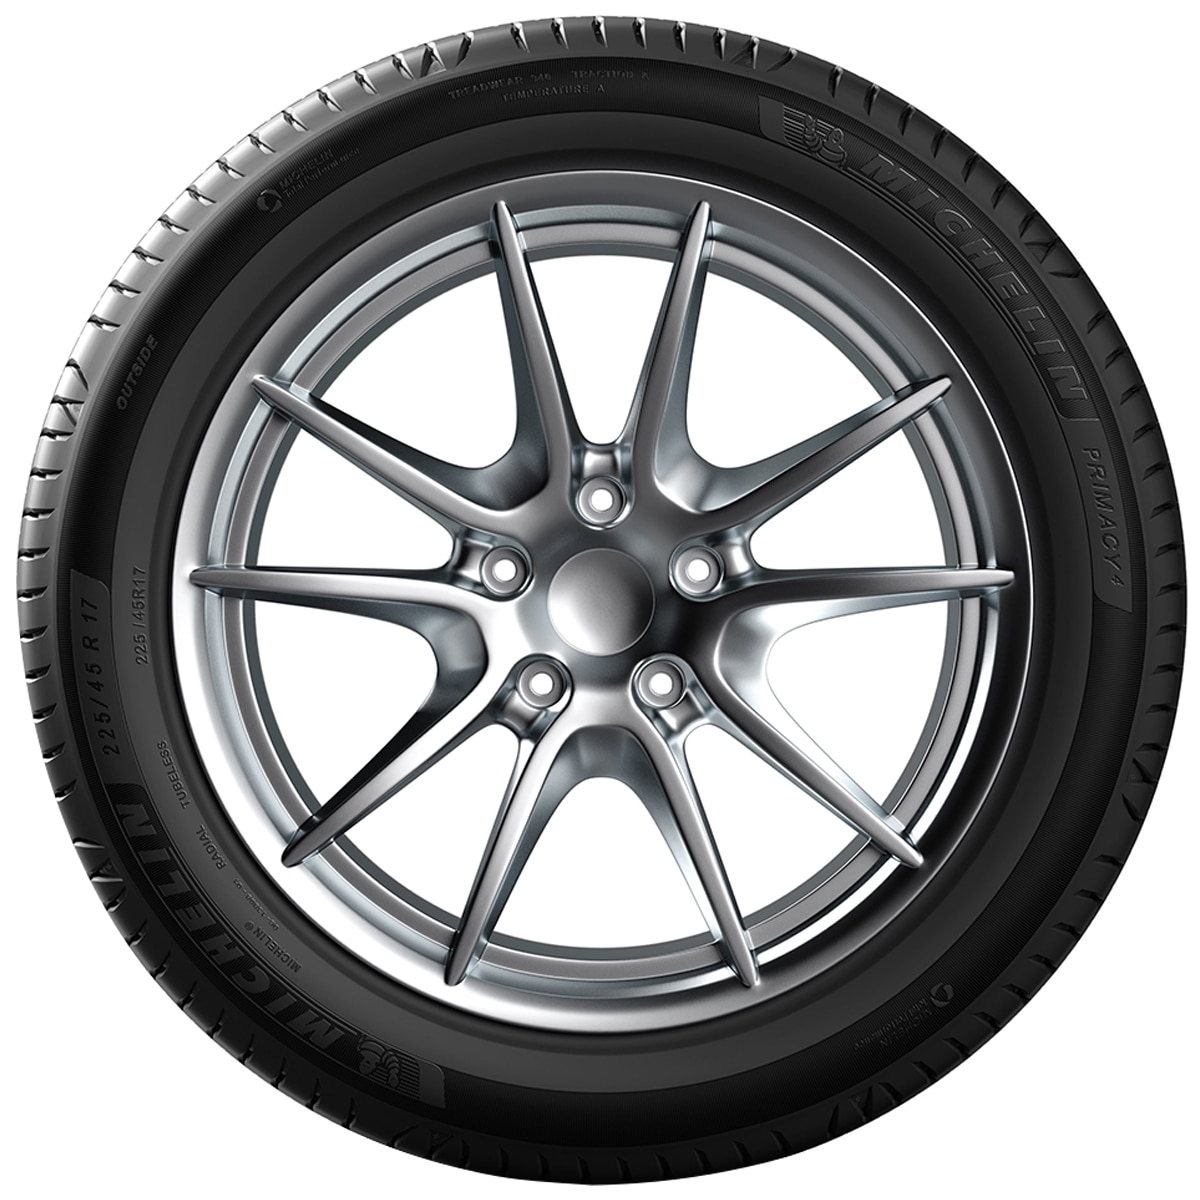 215/45R17 91W PRIMACY 4 -Tyre